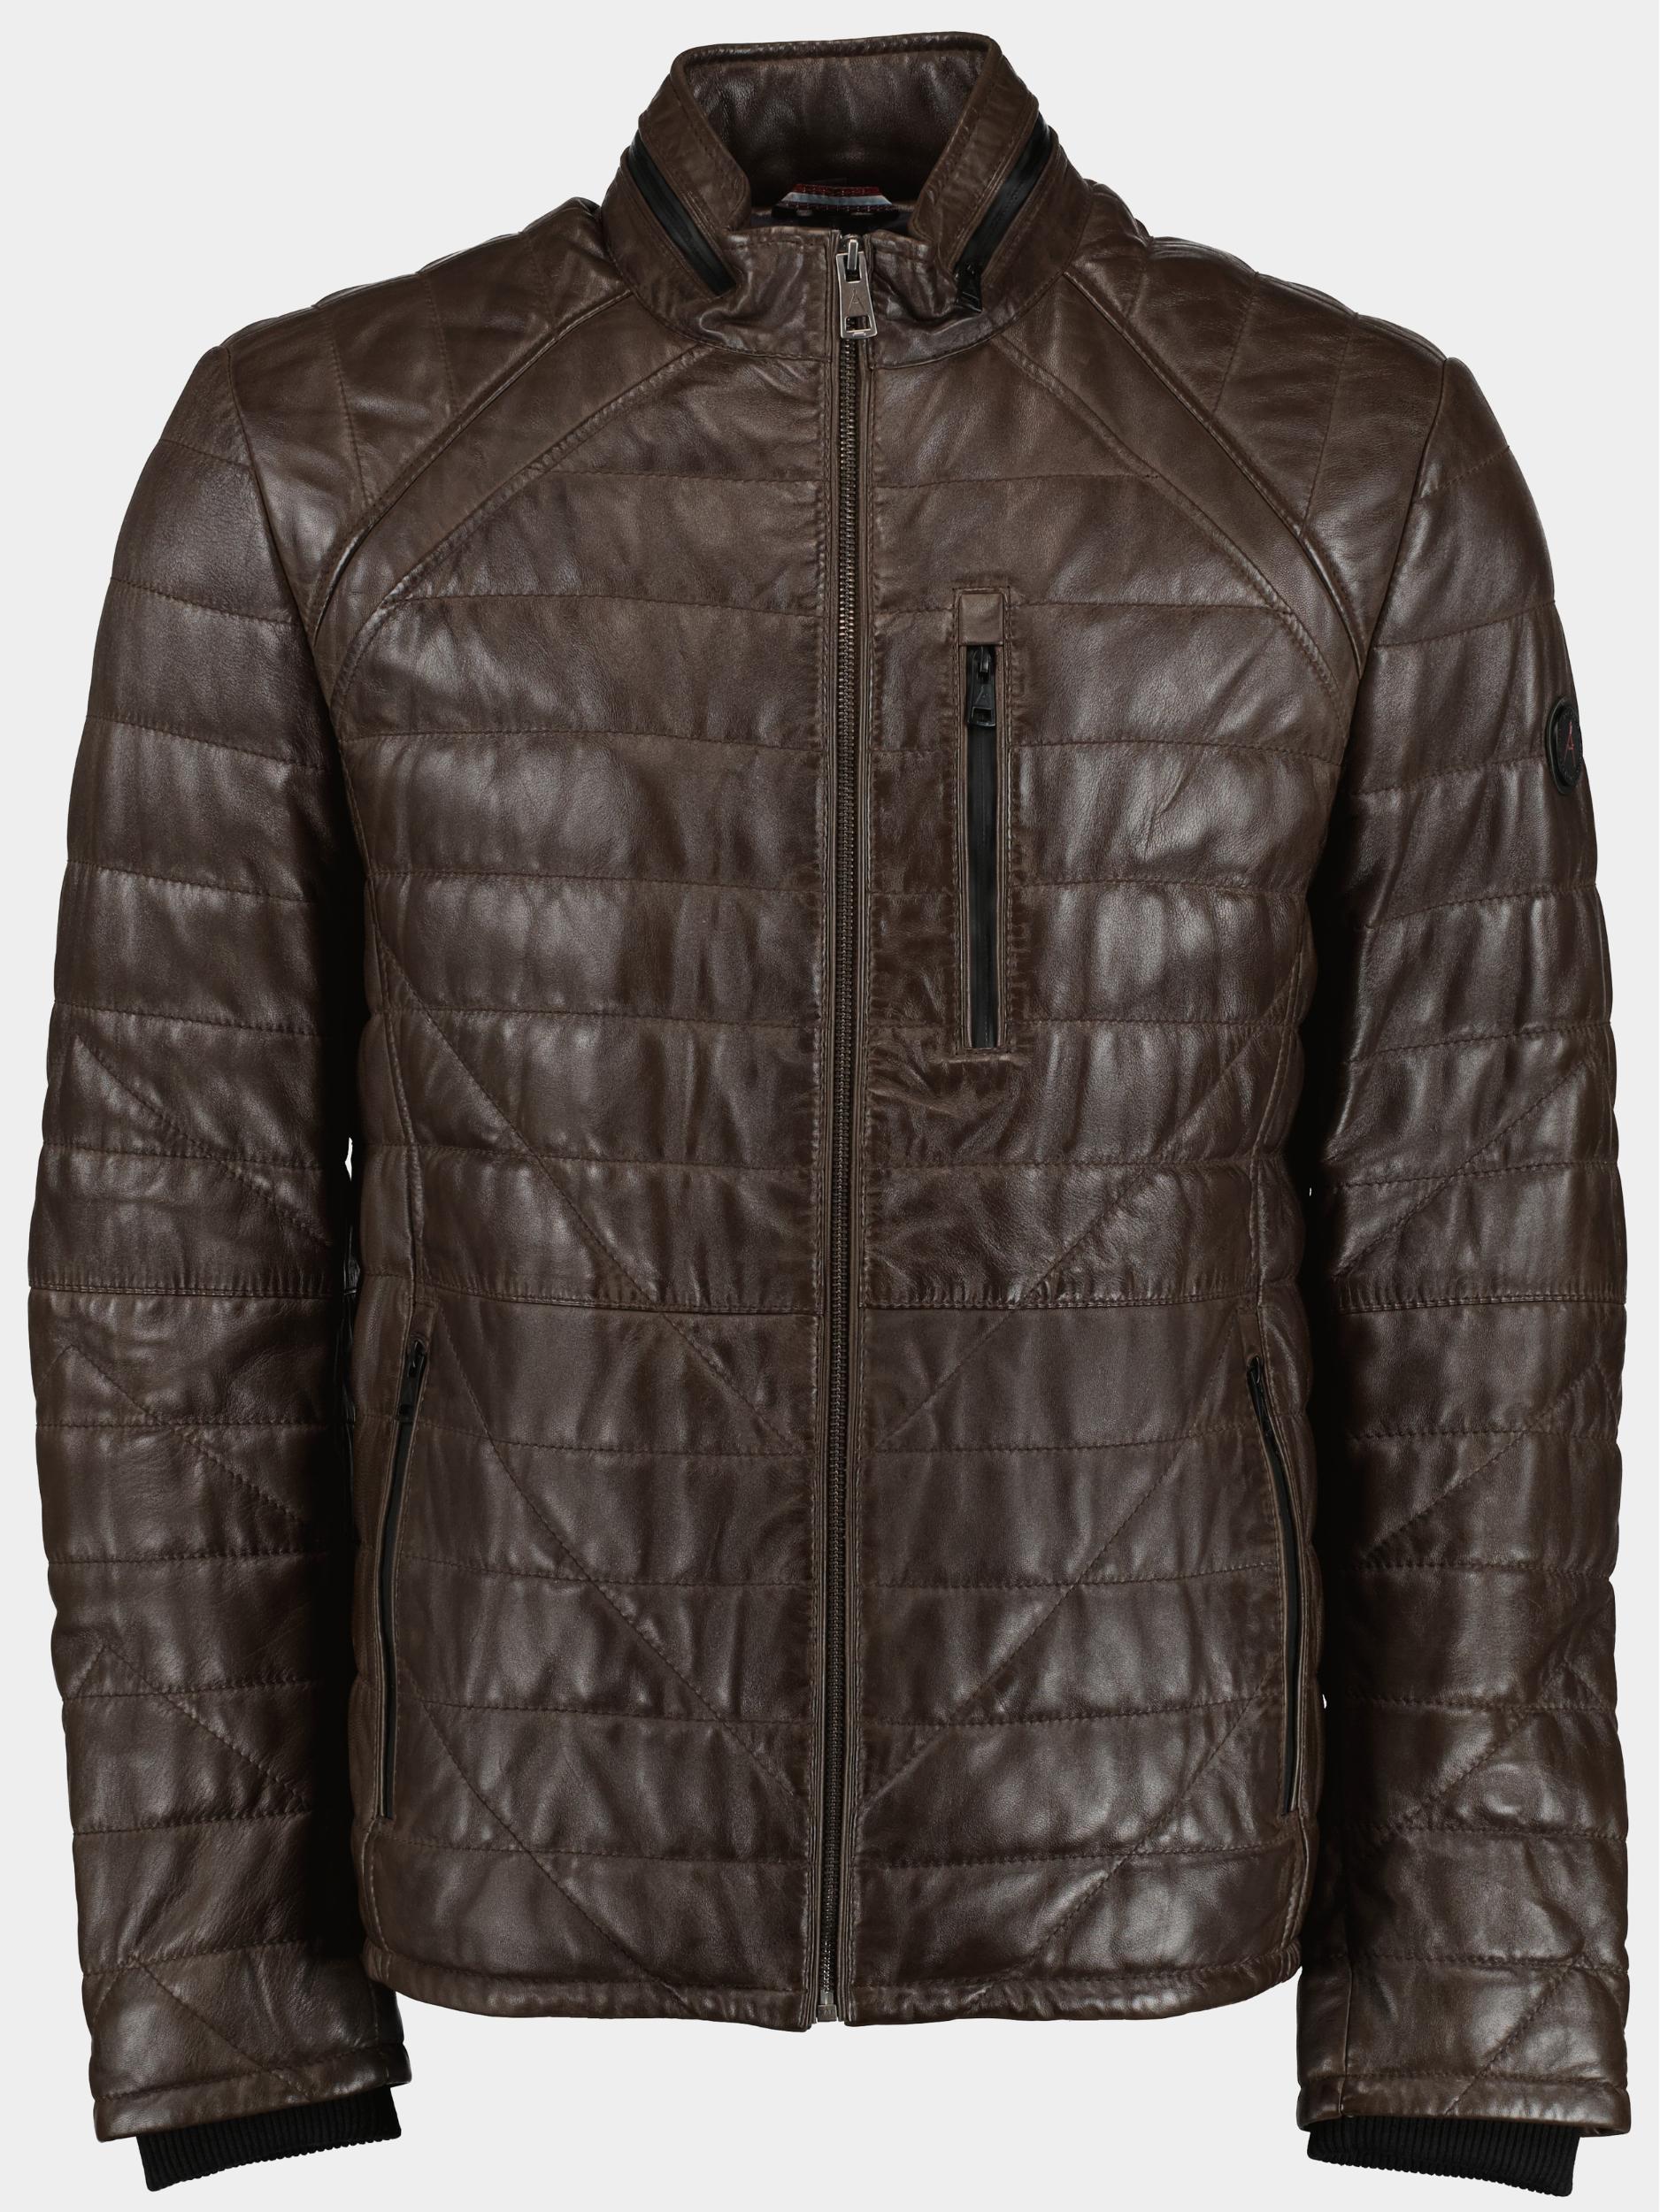 Afbeelding van DNR Lederen jack leather jacket 52215.2/580